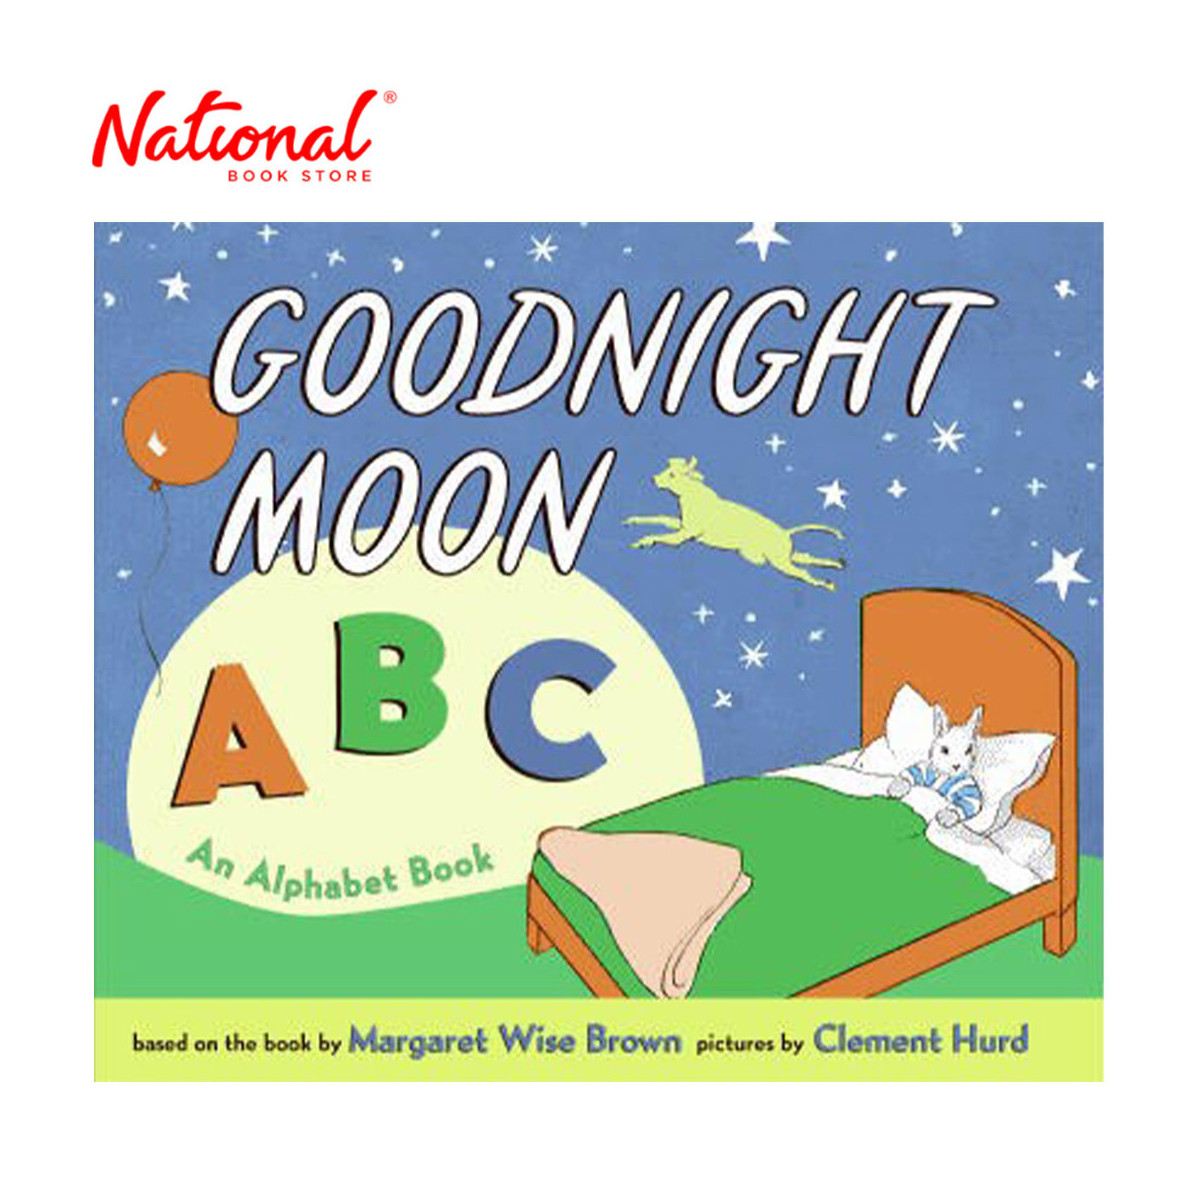 Goodnight Moon ABC By Margaret Wise Brown - Board Book - Children's - Preschool